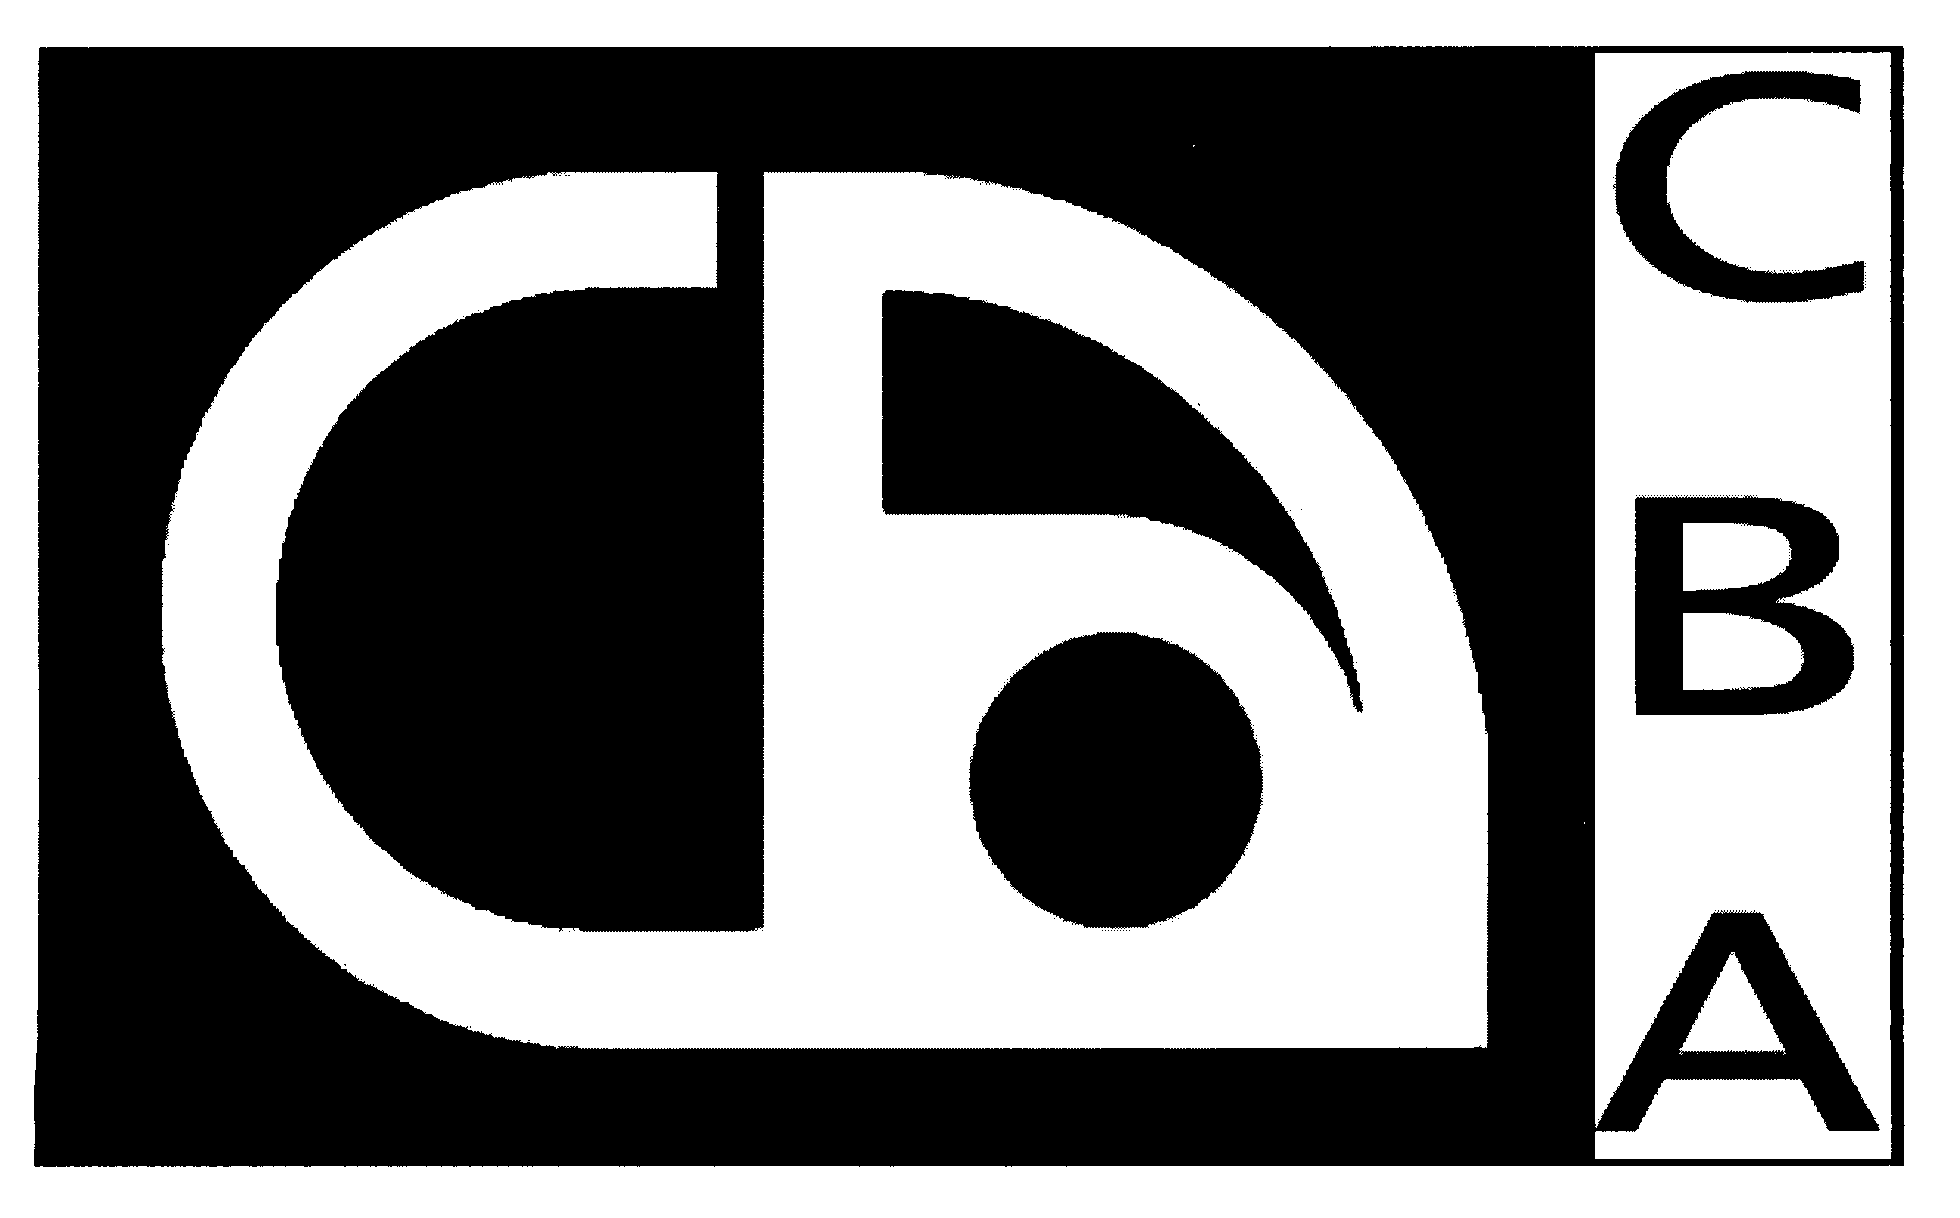 Trademark Logo CBA